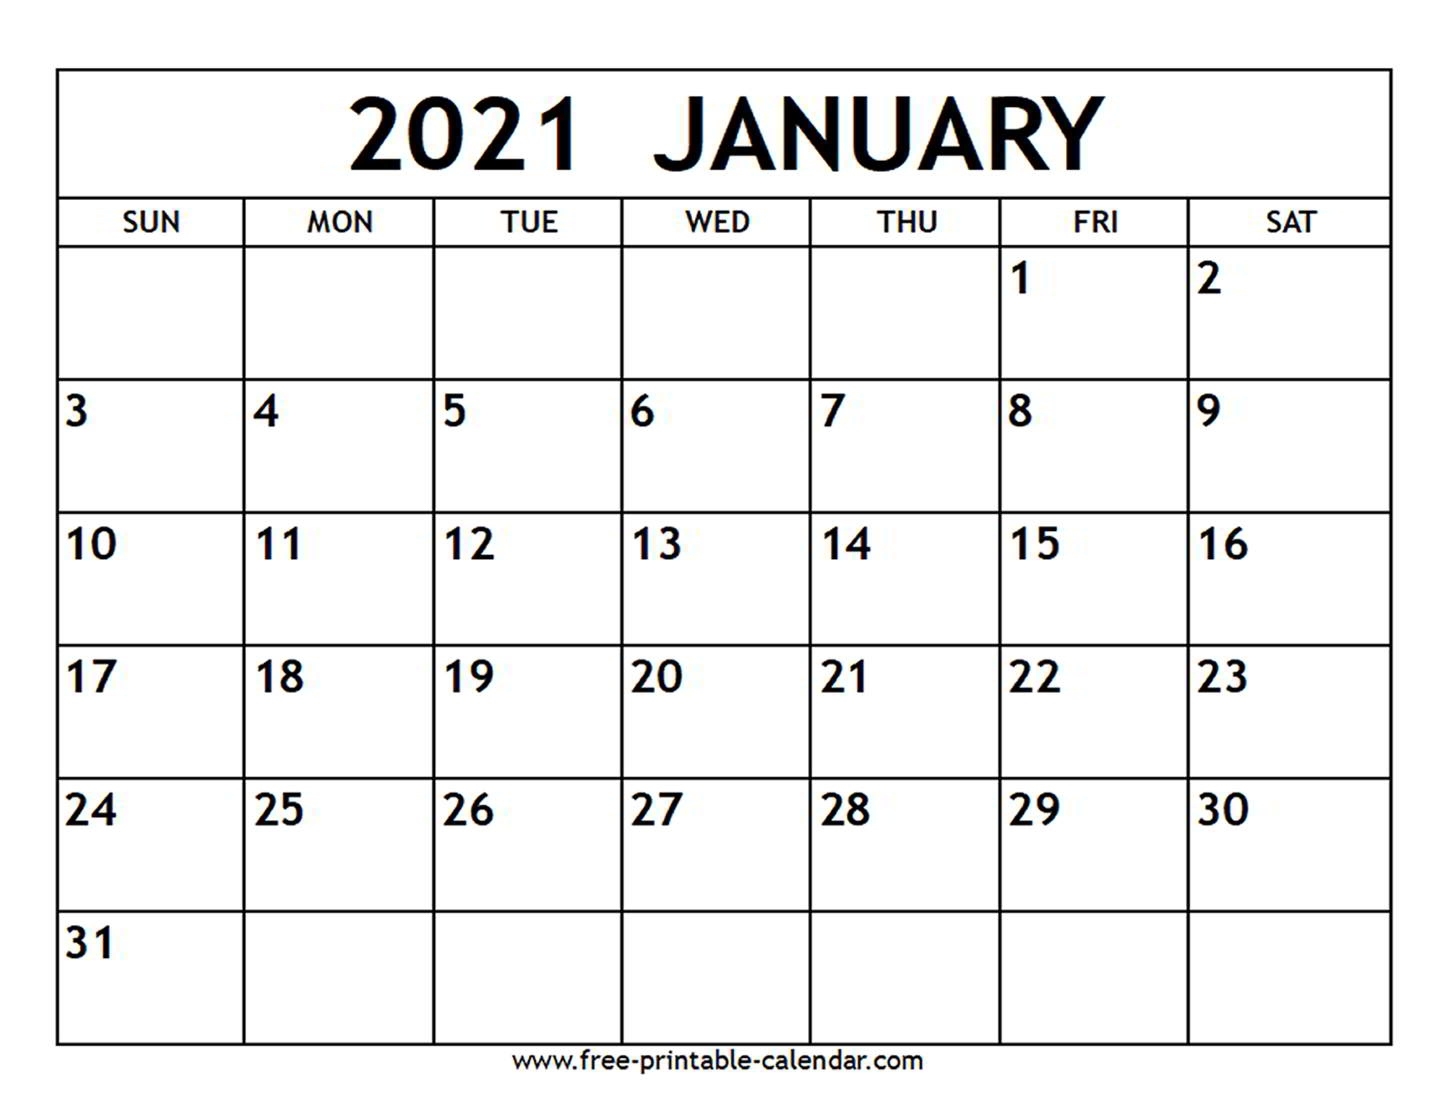 January 2021 Calendar - Free-Printable-Calendar Printable Calendar 2021